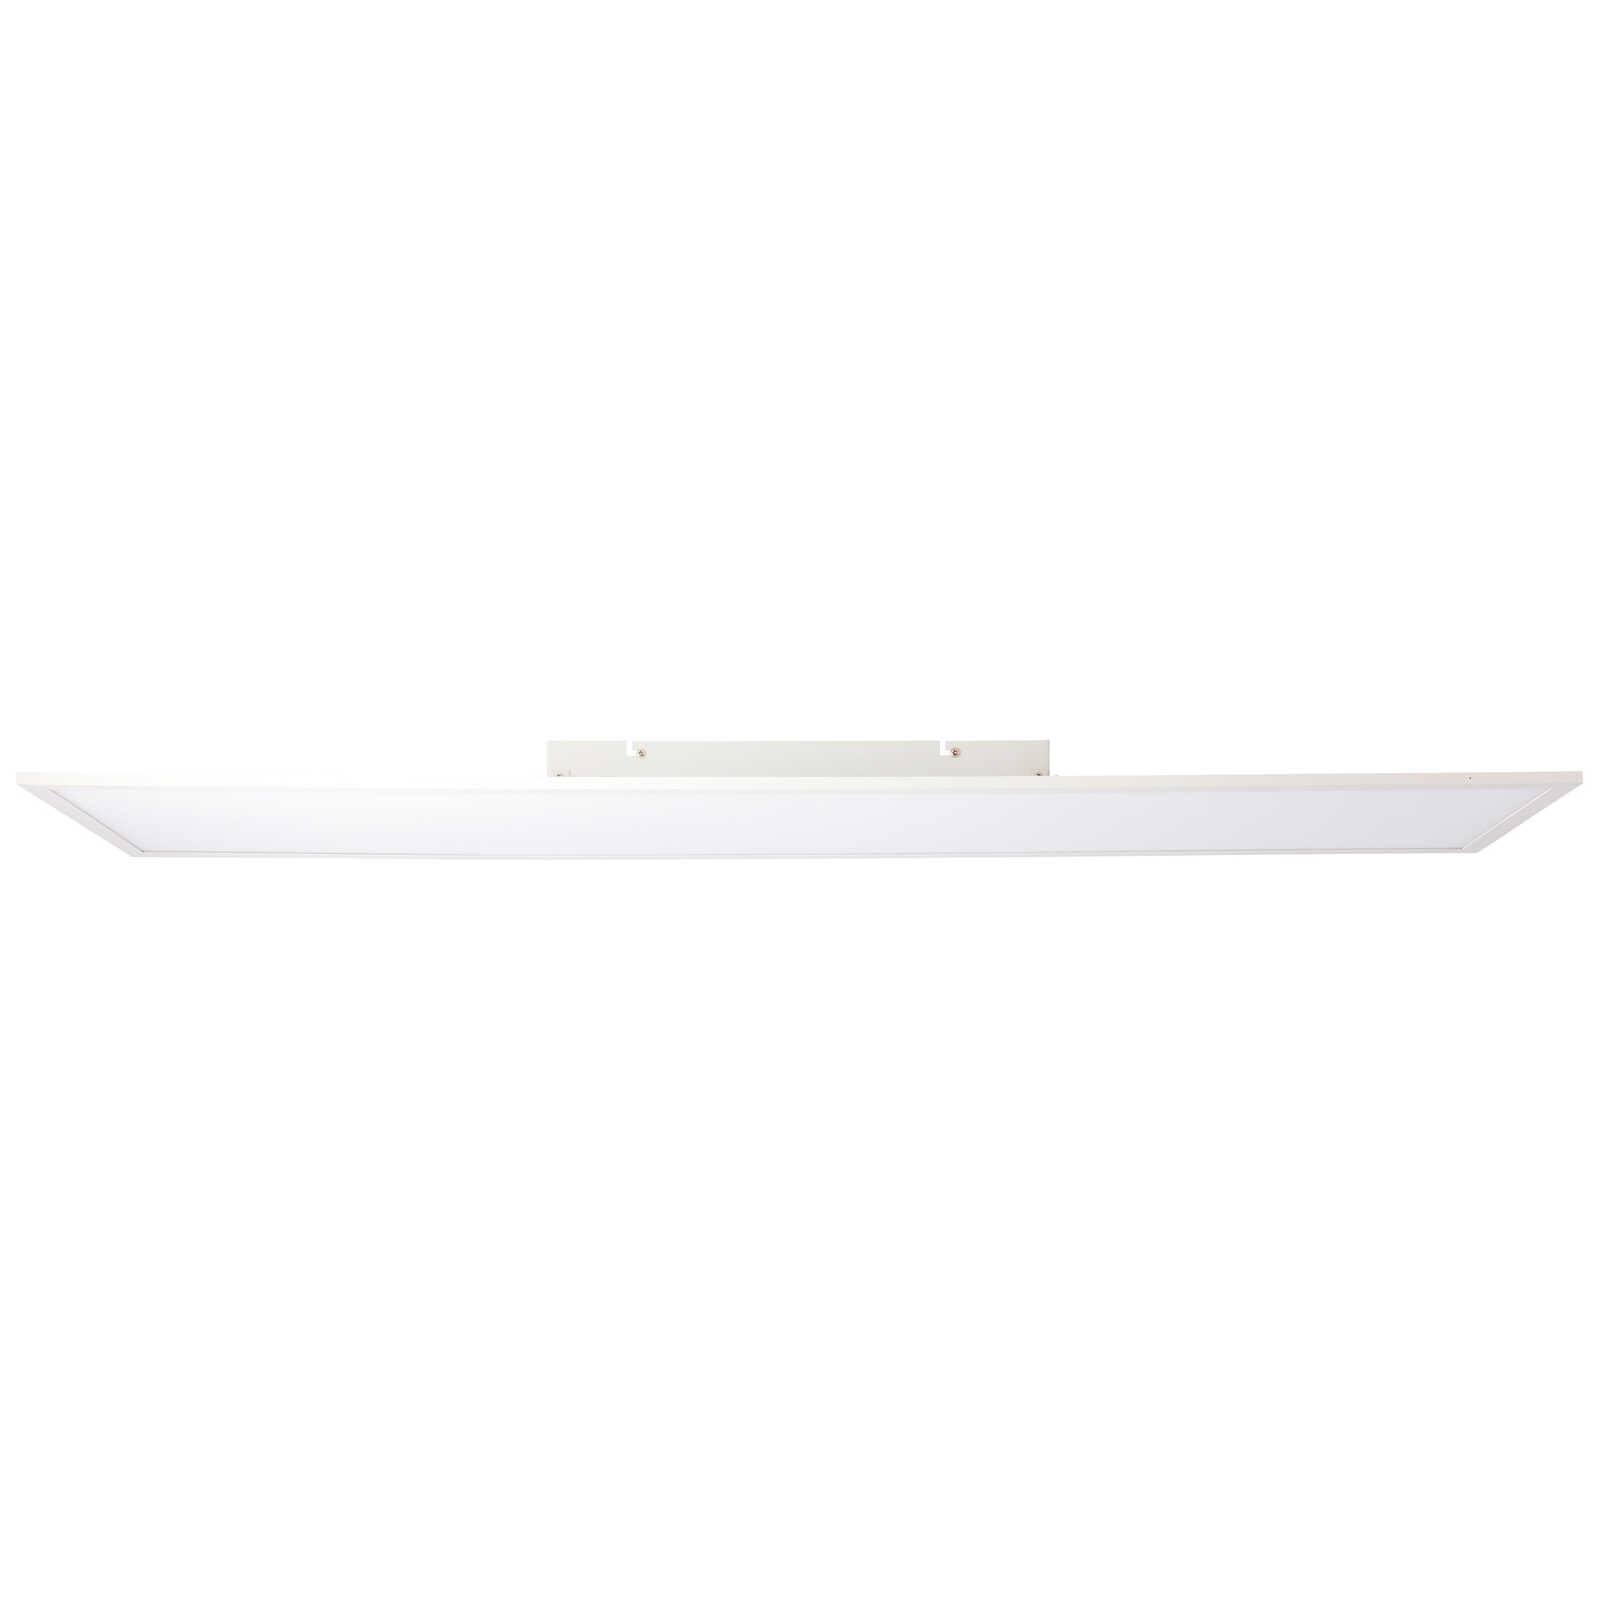             Plastic ceiling light - Constantin 13 - White
        